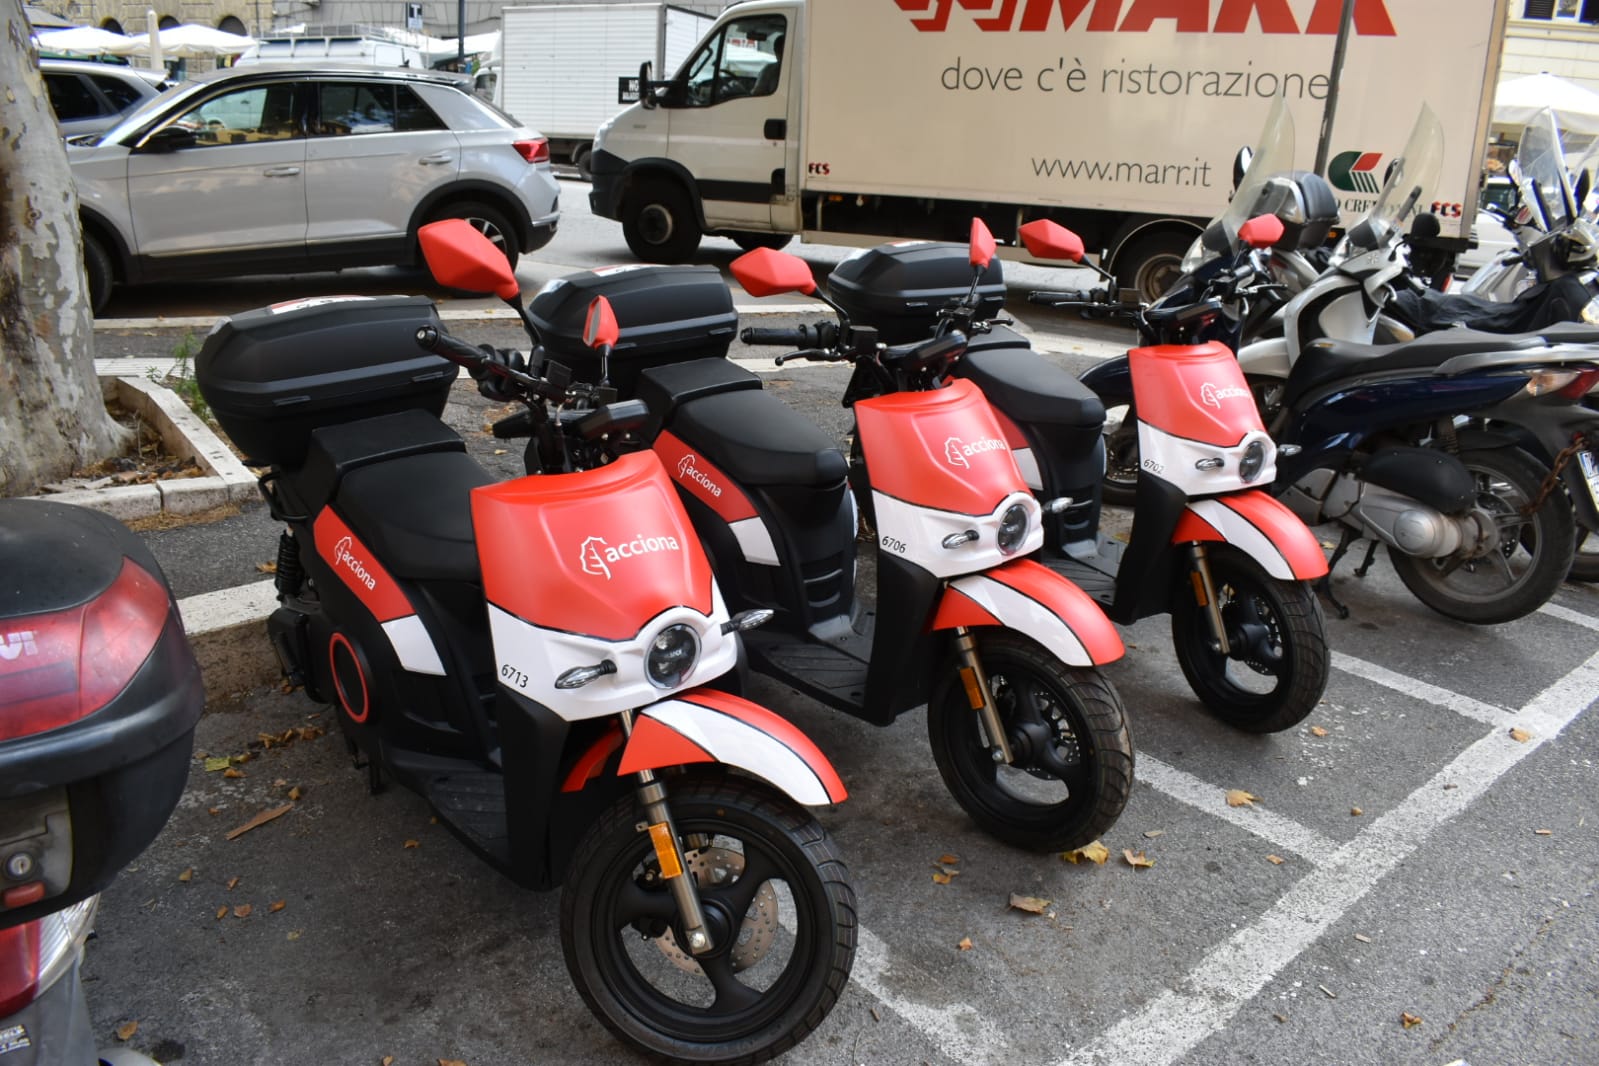 Nuovi scooter elettrici per Prati. Tutto ciò che c'è da sapere per - Prati